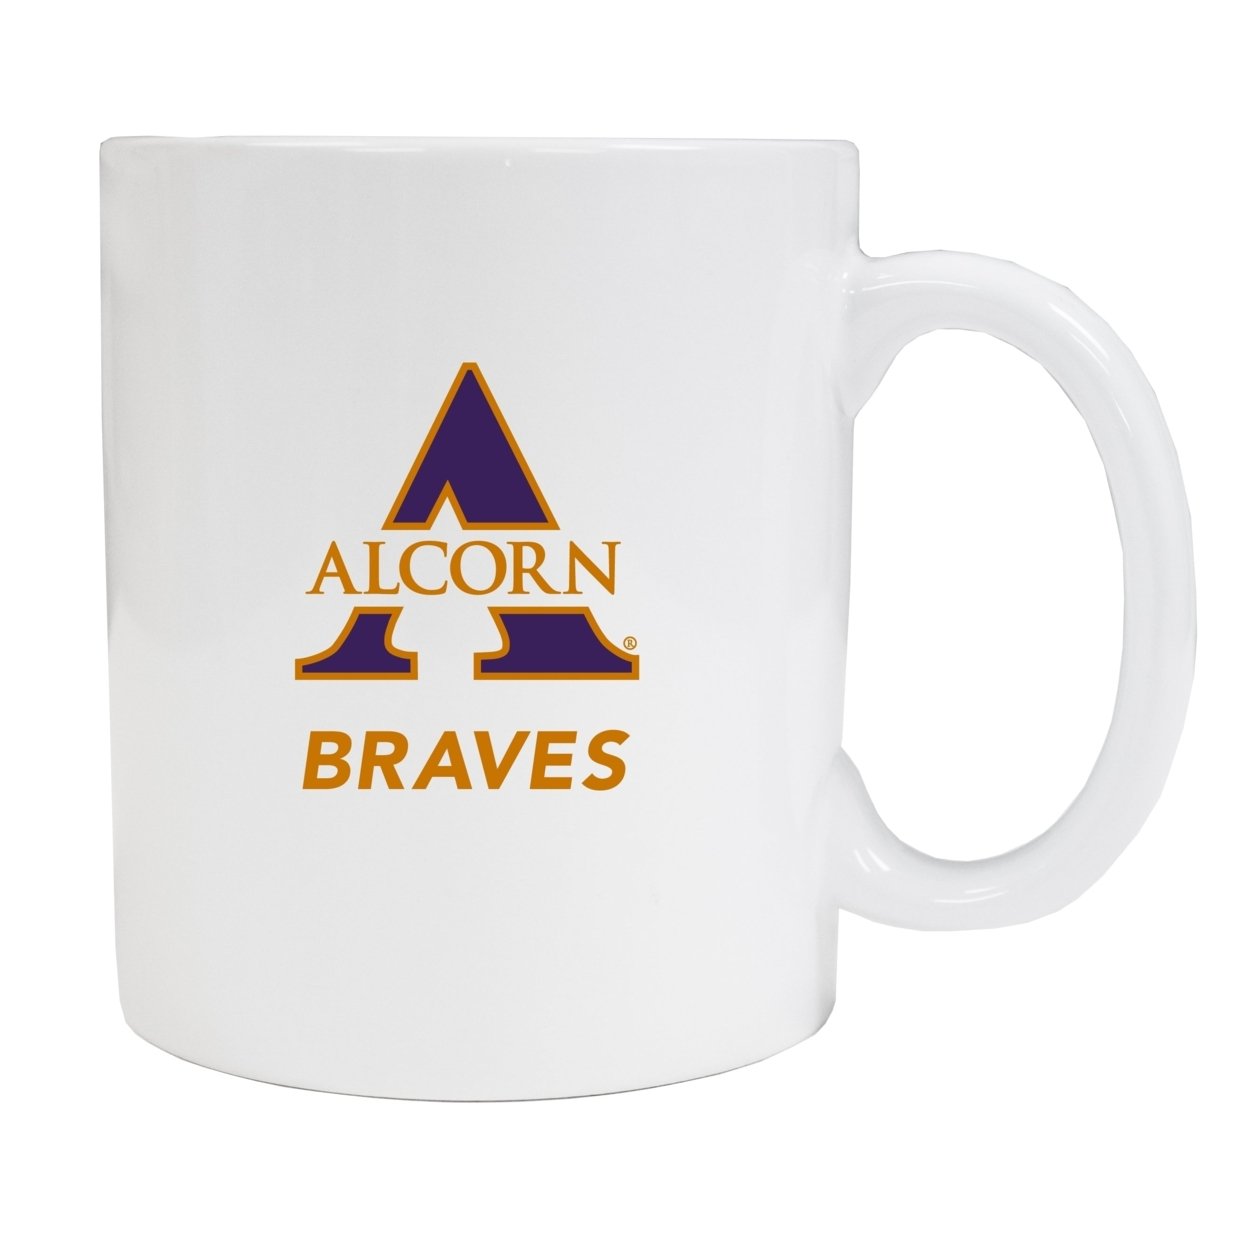 Alcorn State Braves White Ceramic Mug 2-Pack (White).